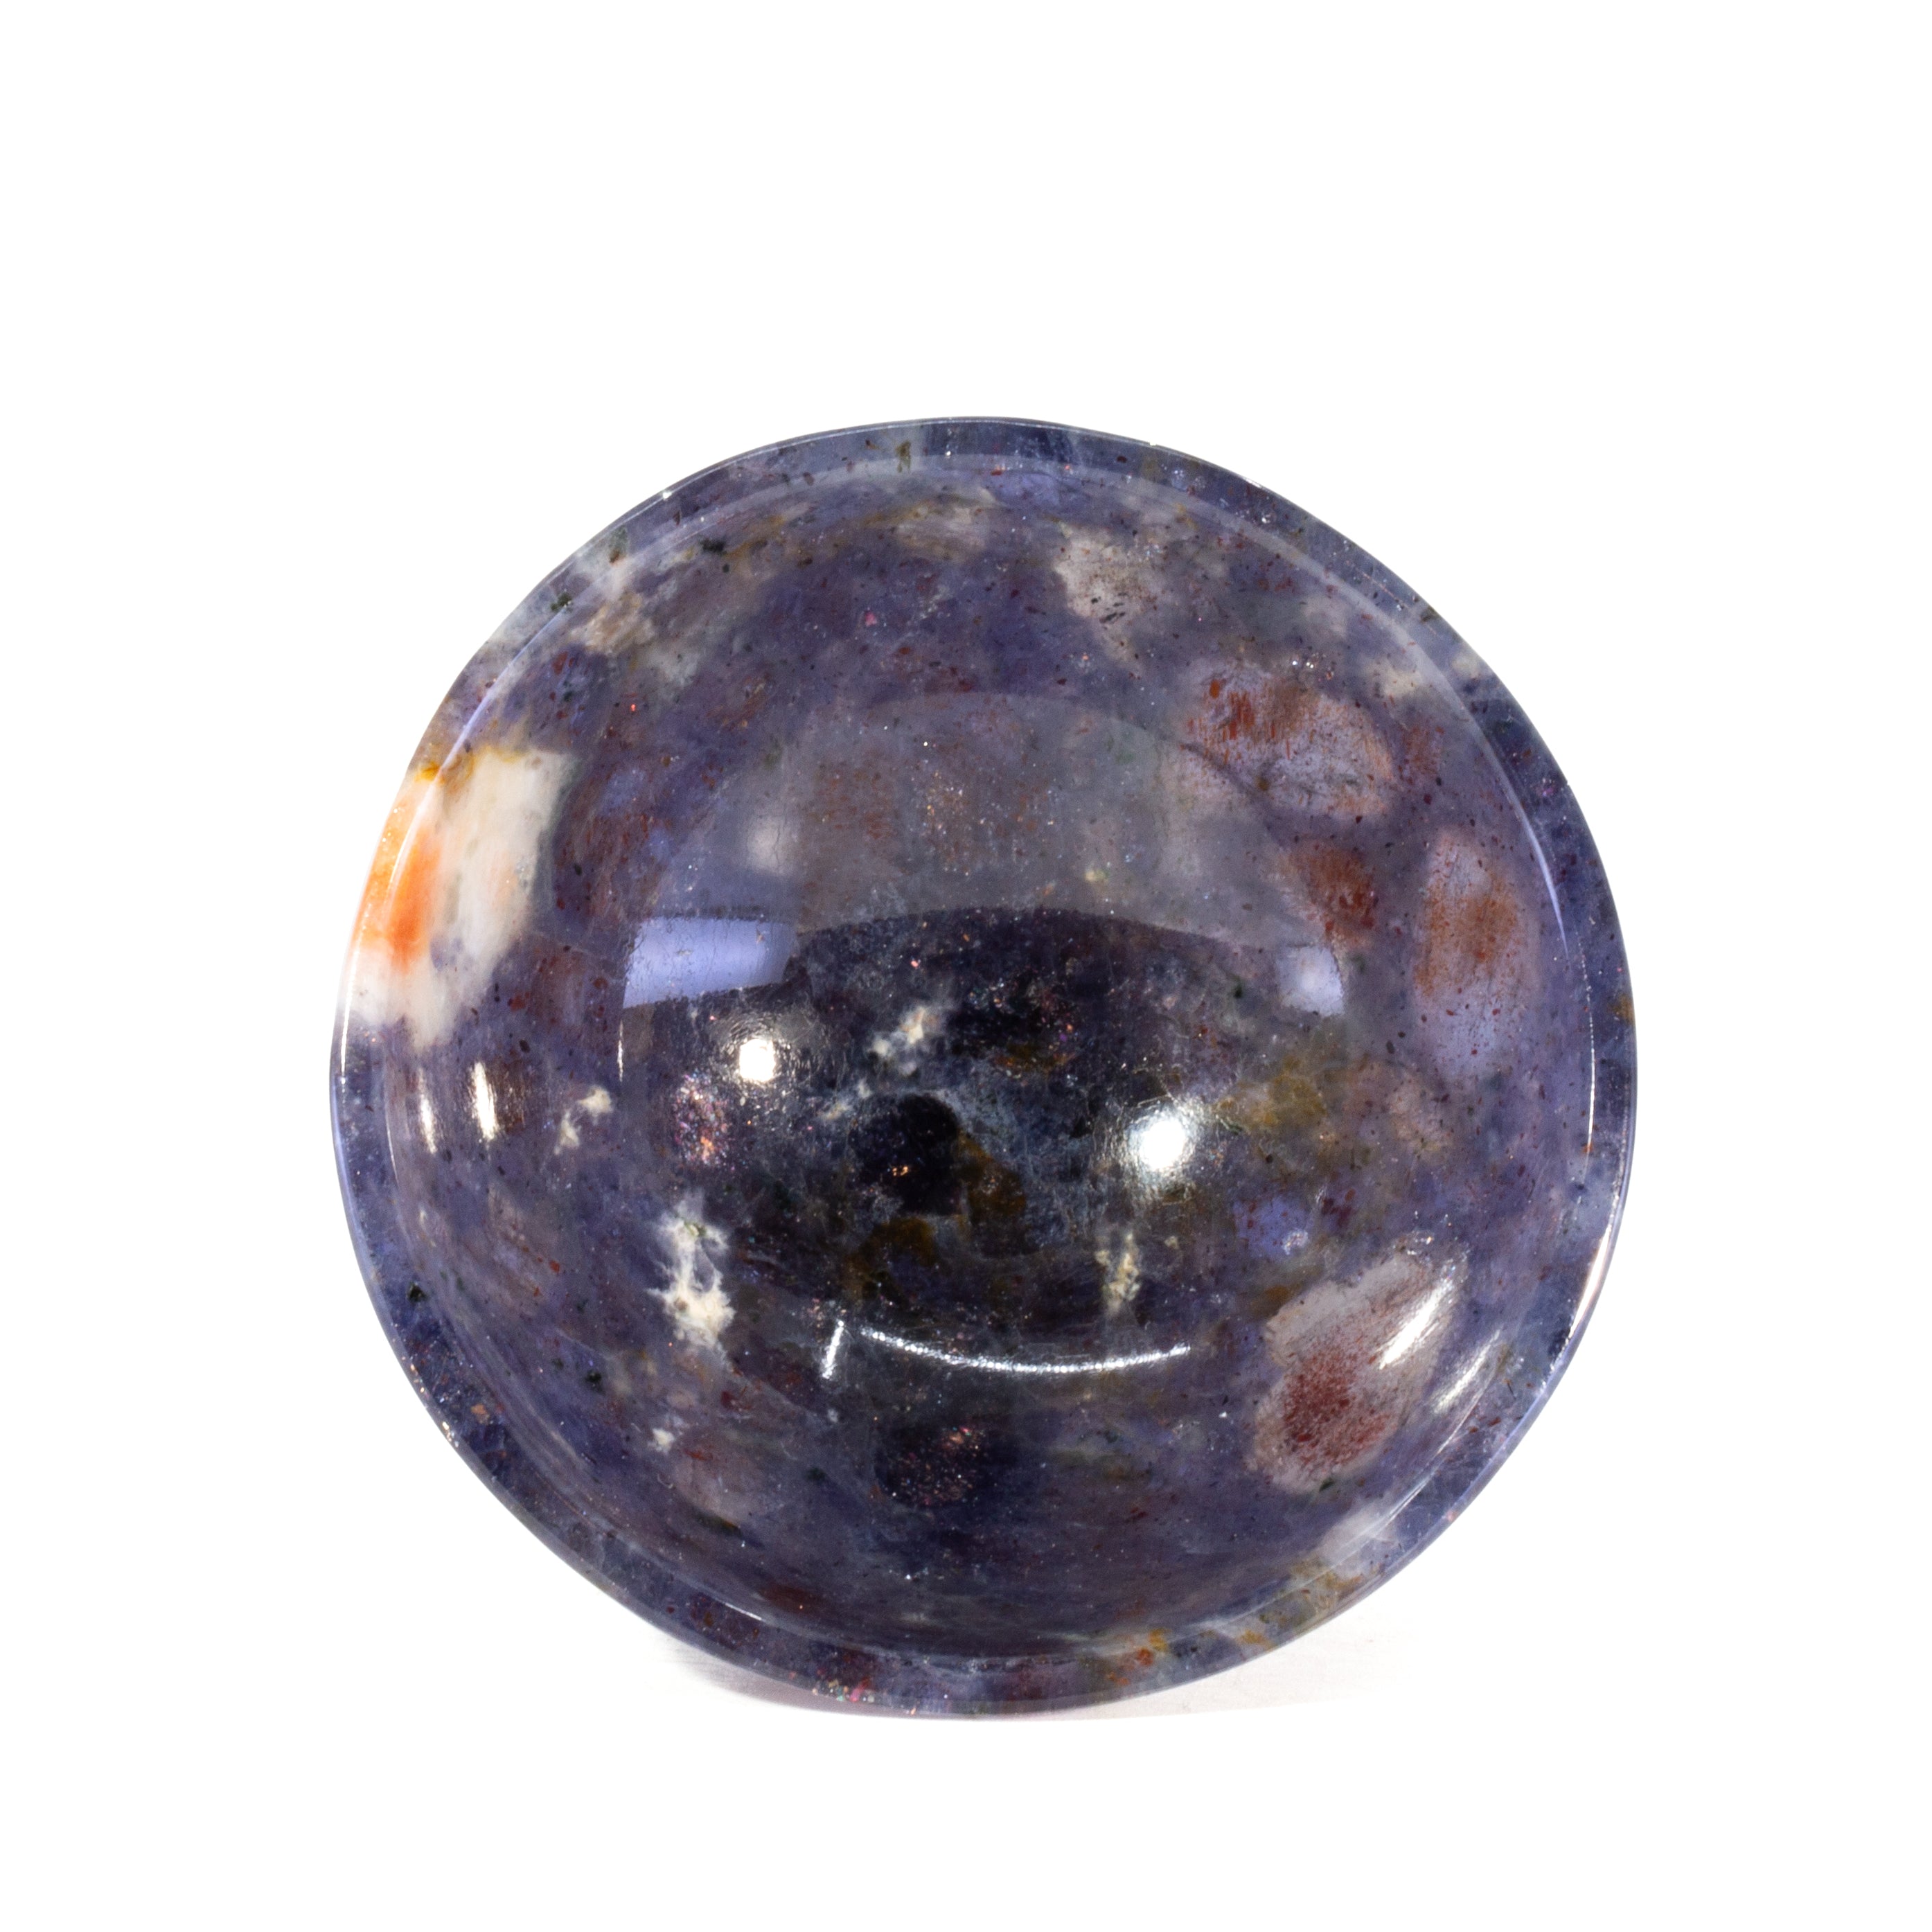 Iolite and Sunstone 2.5 inch 51.5 gram Polished Crystal Bowl - India - DDR-022B - Crystalarium